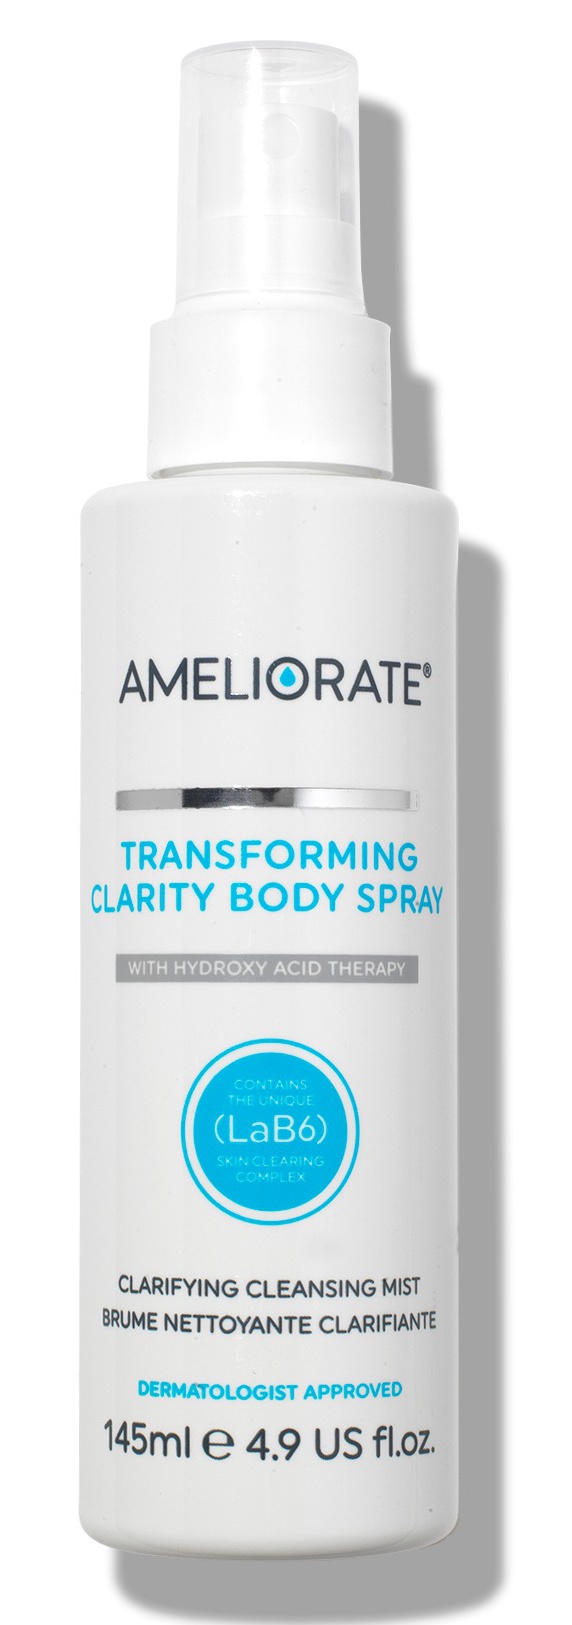 Ameliorate Transforming Body Spray